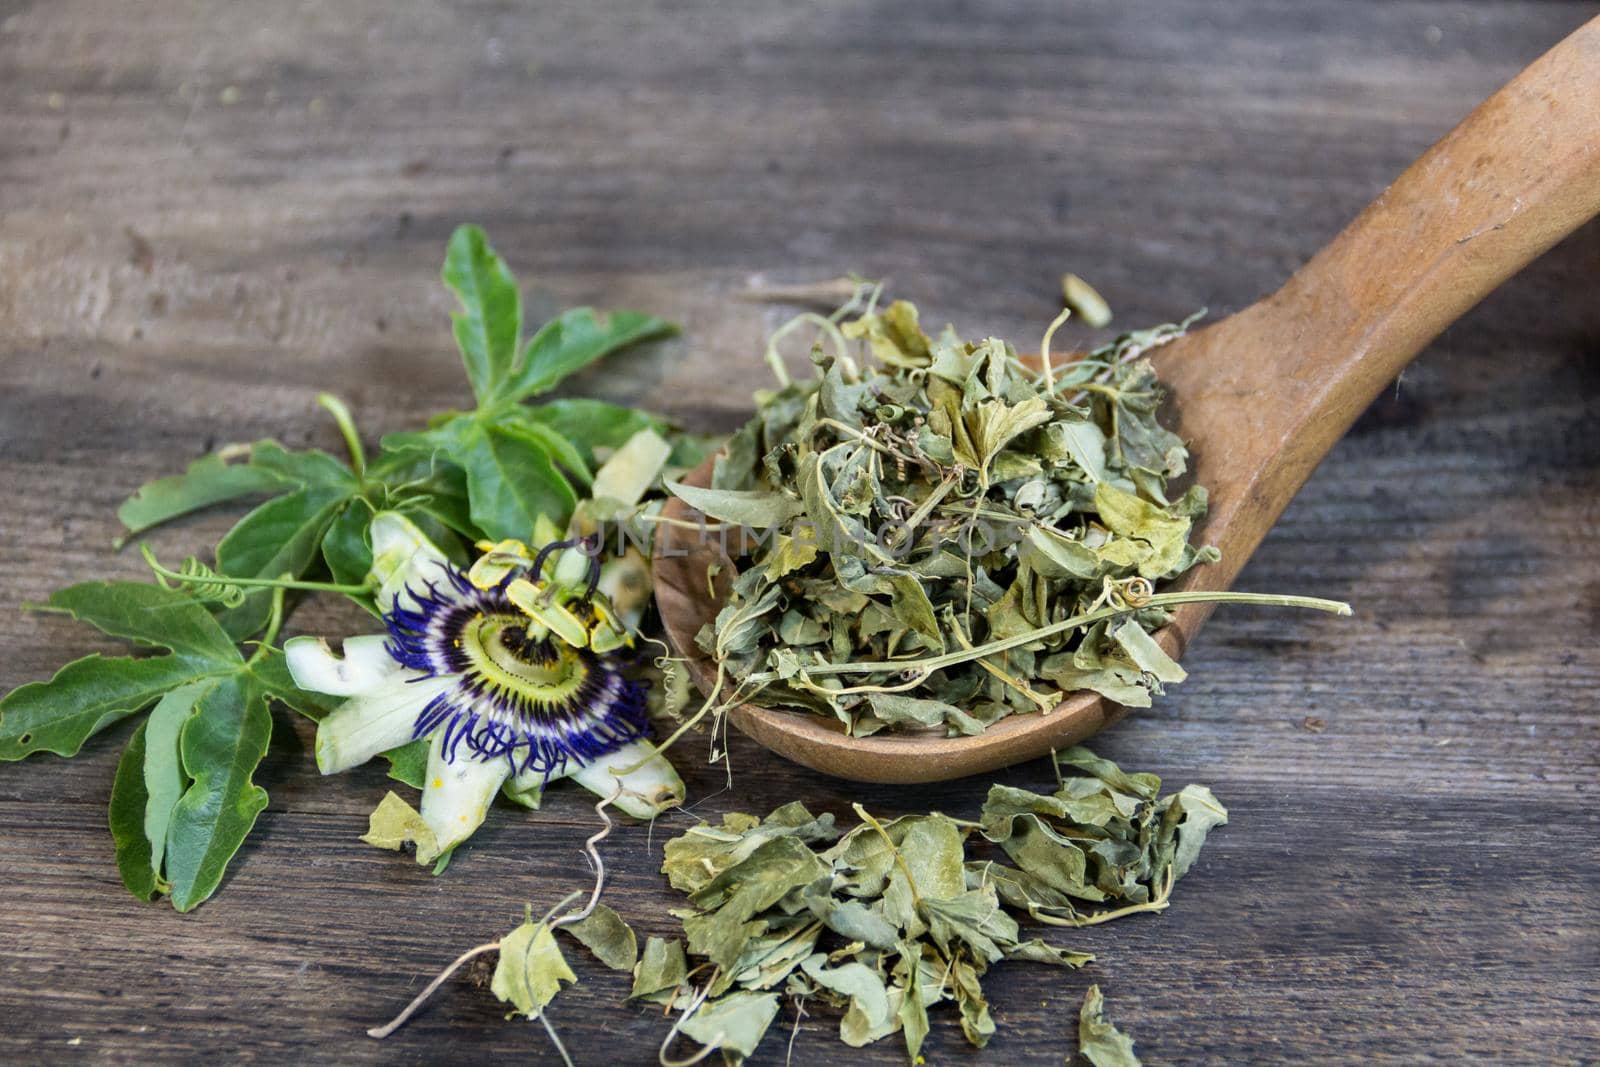 dried leaves of passiflora to drink sedative tea by GabrielaBertolini